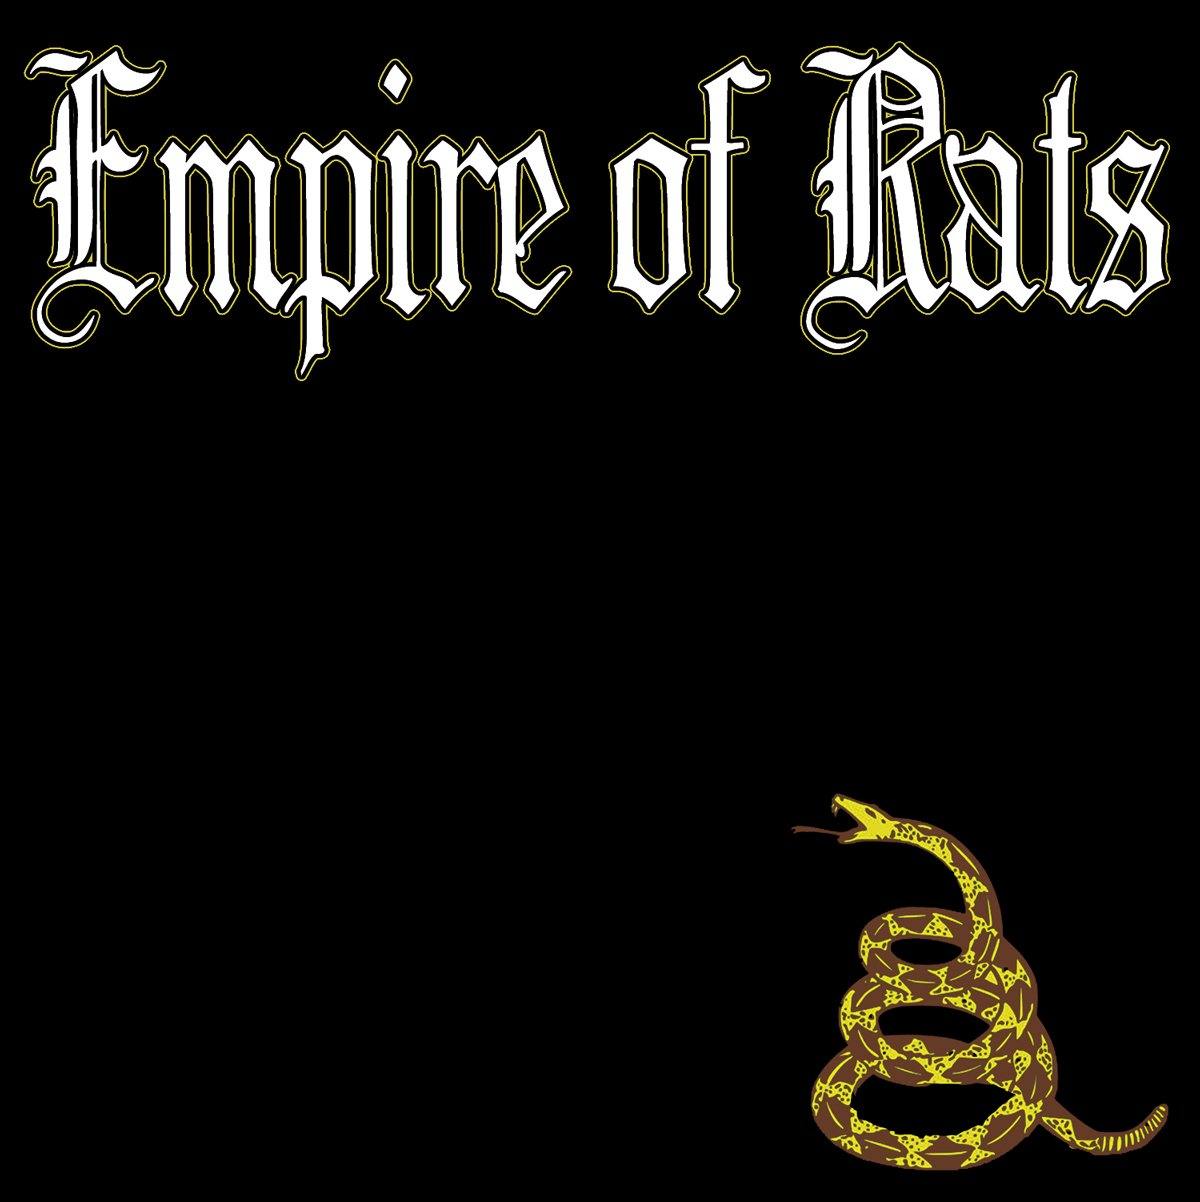 Buy – Empire of Rats "No Peace" Digital Download – Band & Music Merch – Cold Cuts Merch